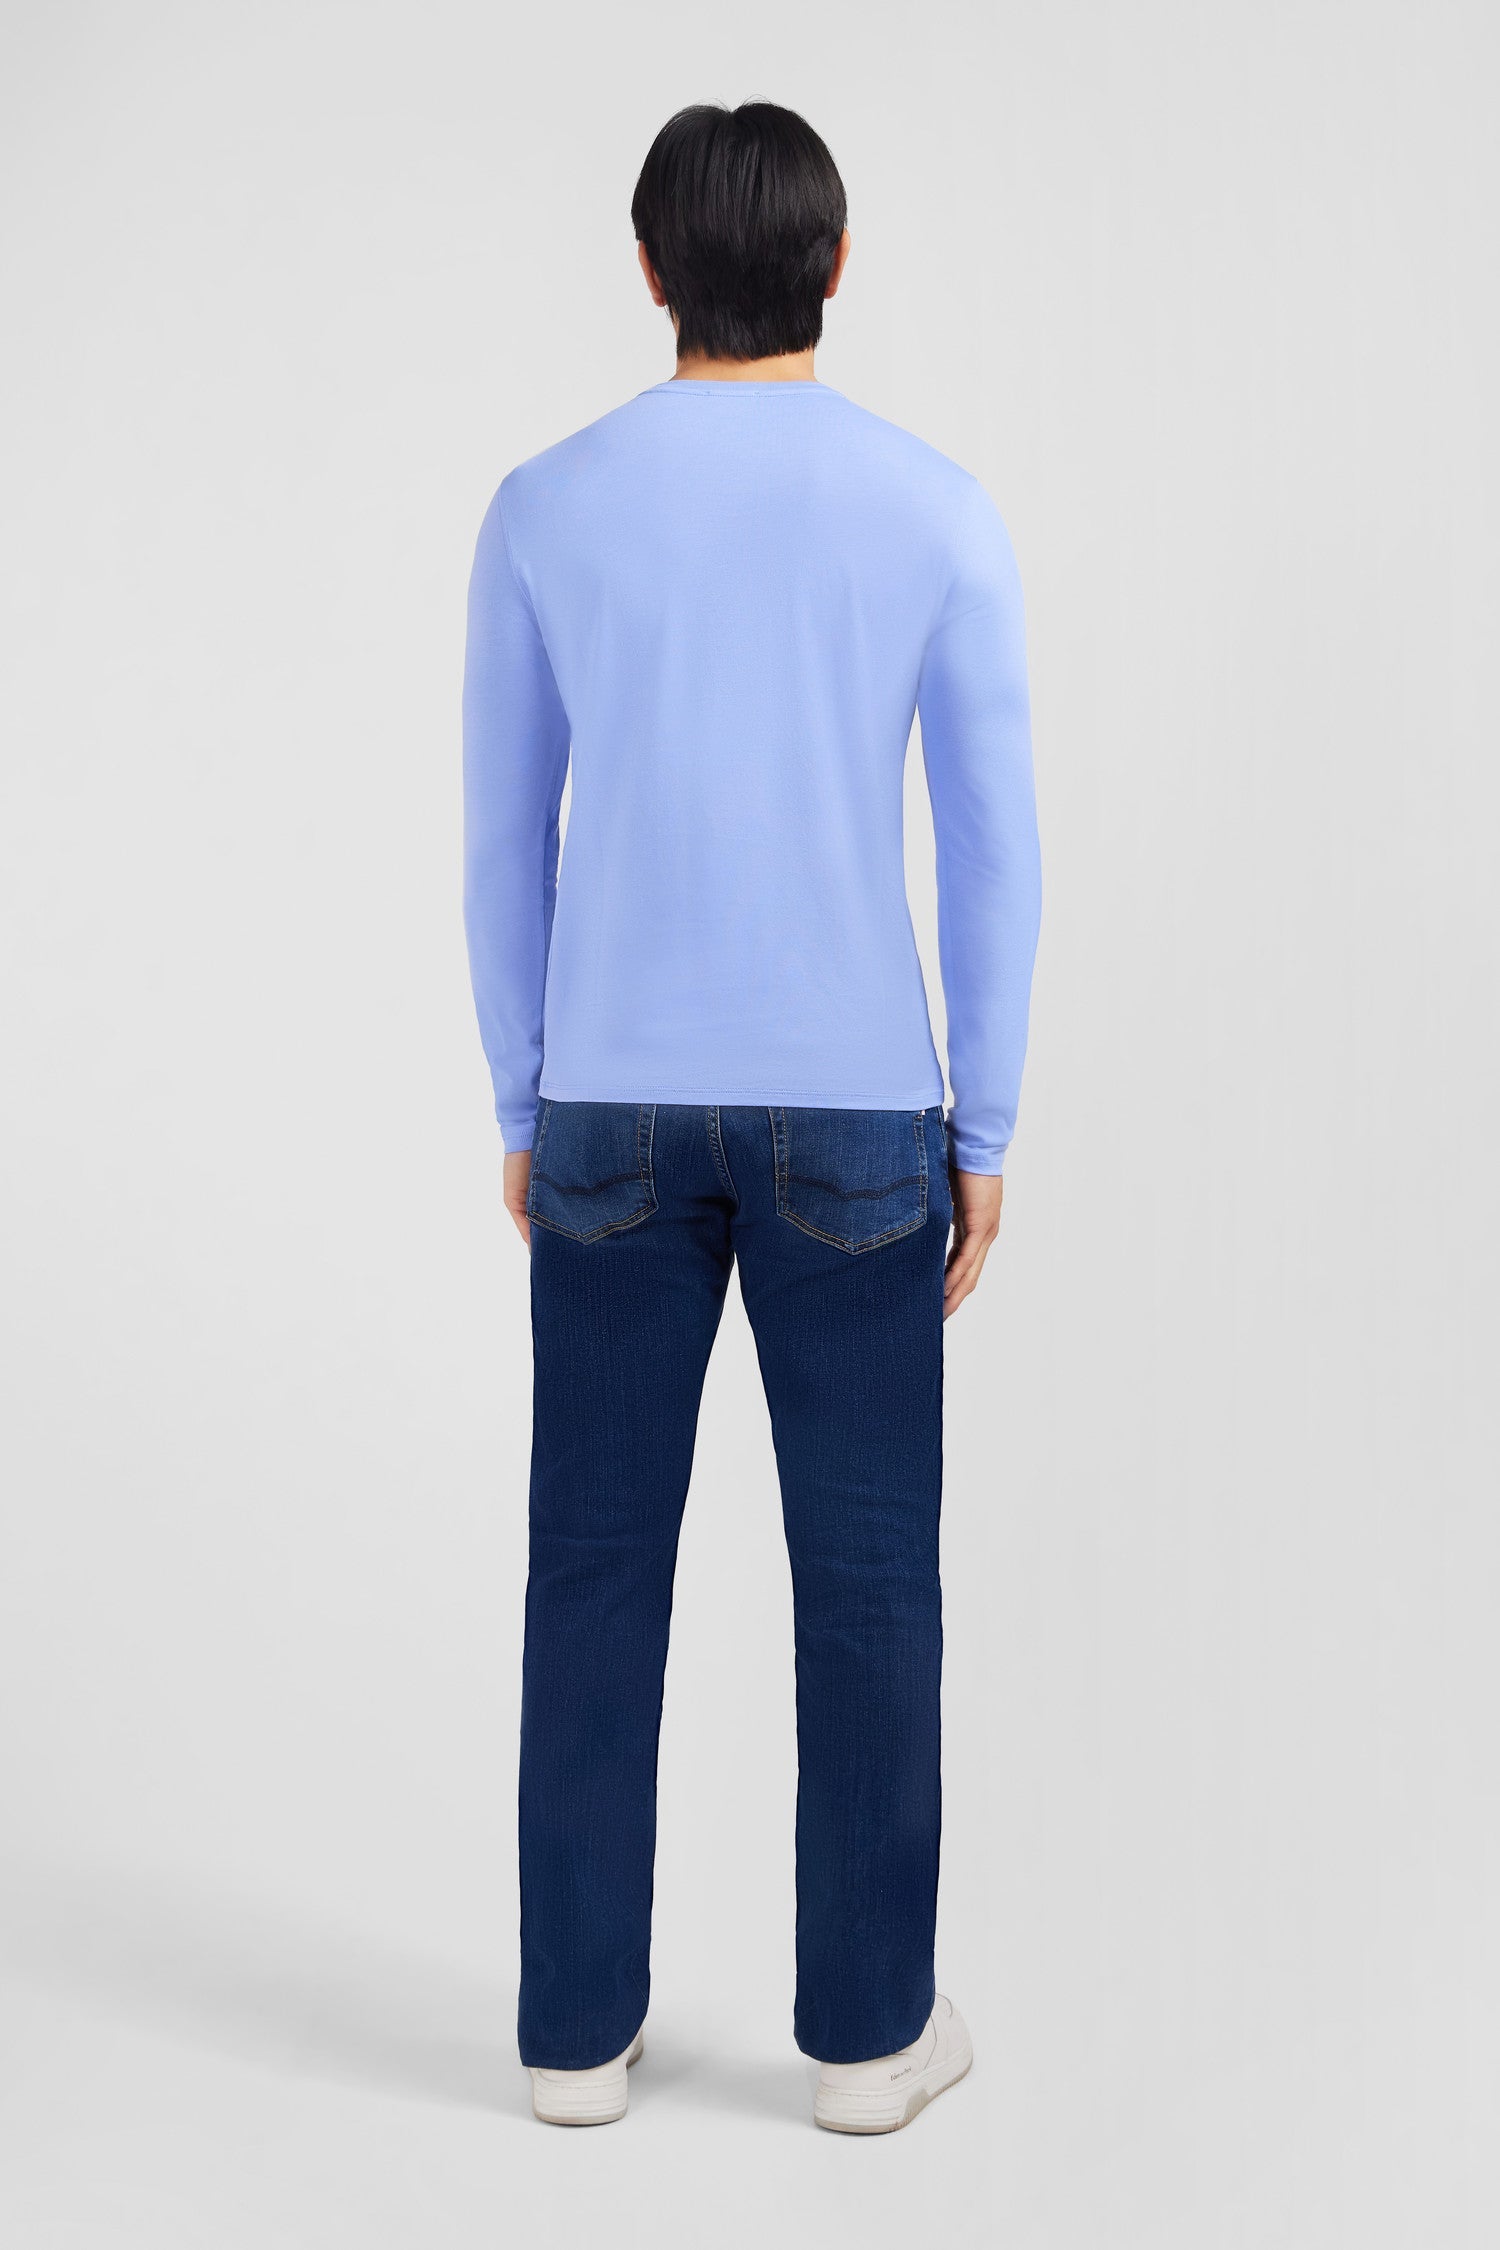 T-shirt bleu col rond à manches longues